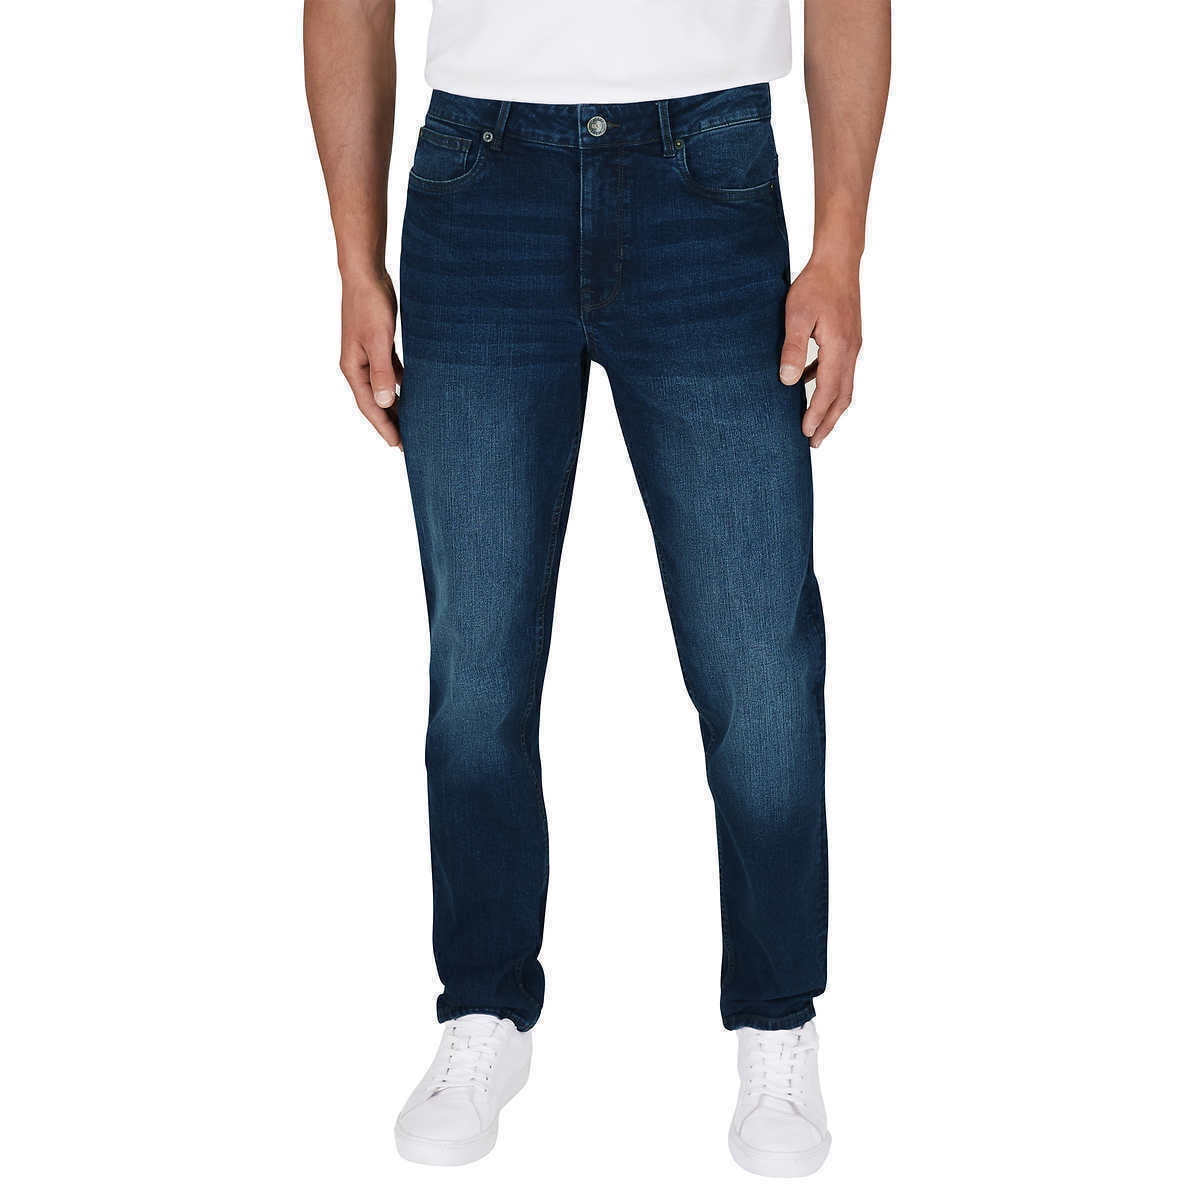 DKNY Men's Duane Straight Fit Jeans (Blue Jeans, 34W x 30L) - Walmart.com